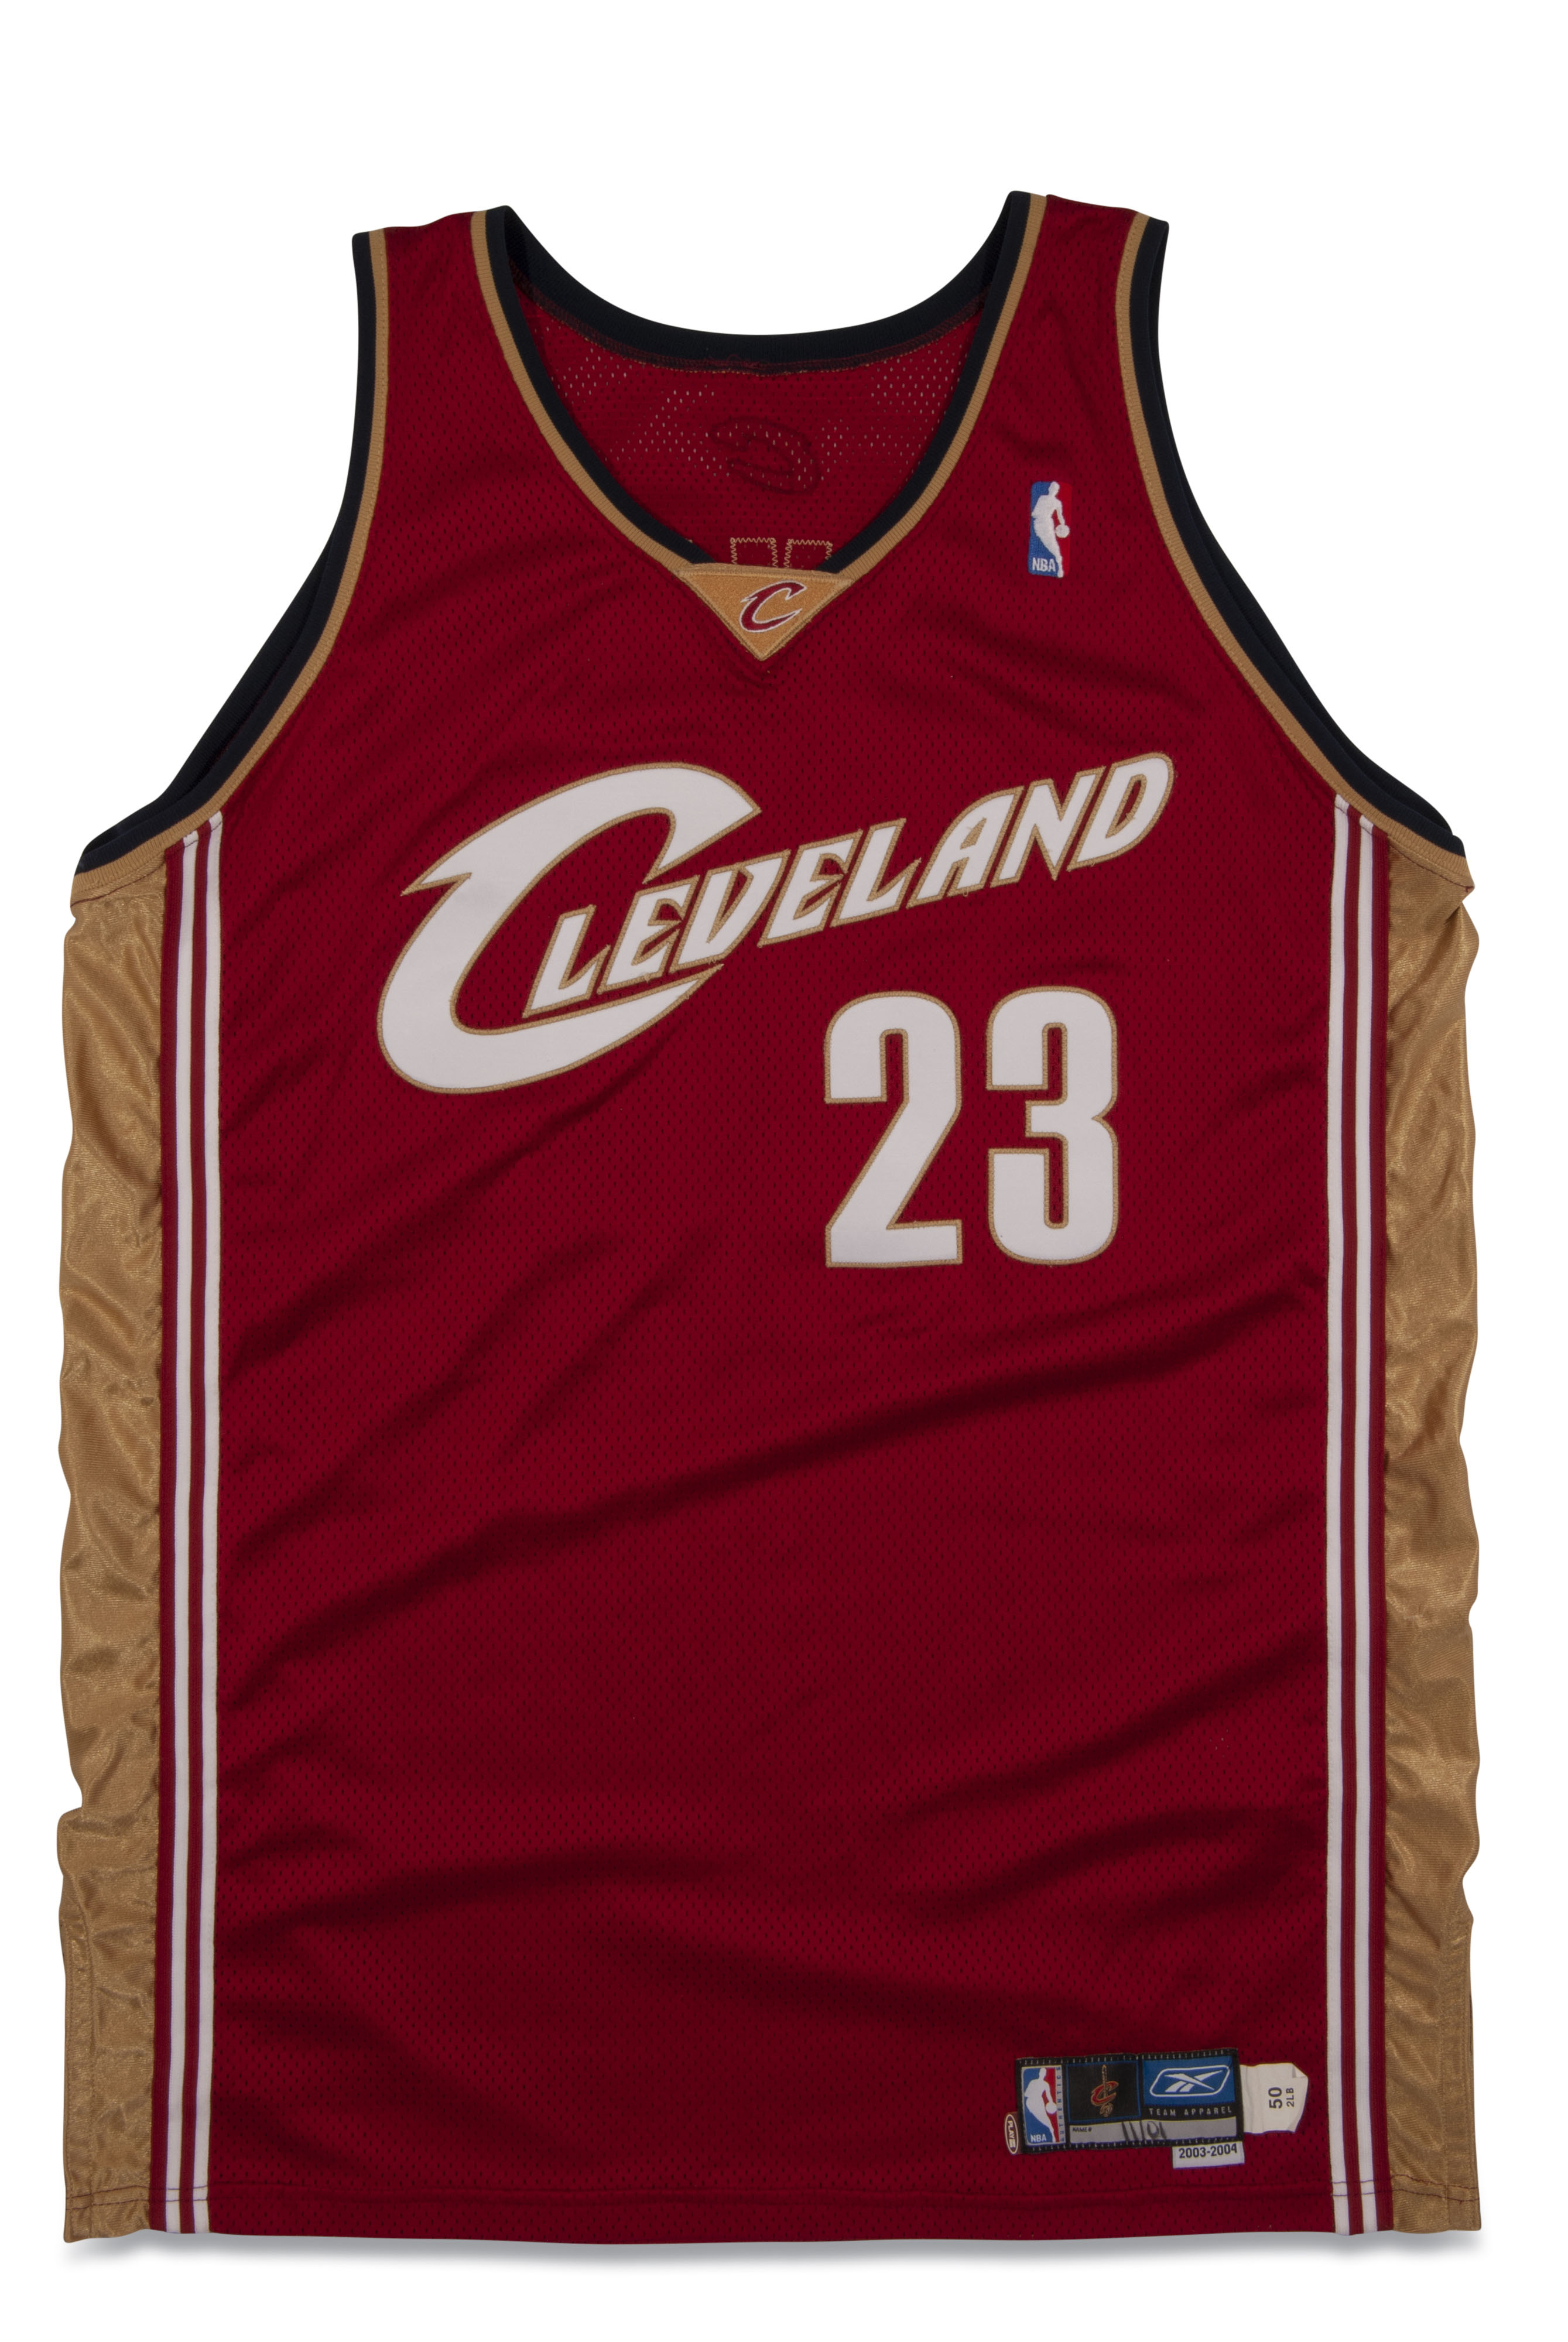 2003-04 LeBron James Signed Cleveland Cavaliers Jersey - UDA, Lot #80927